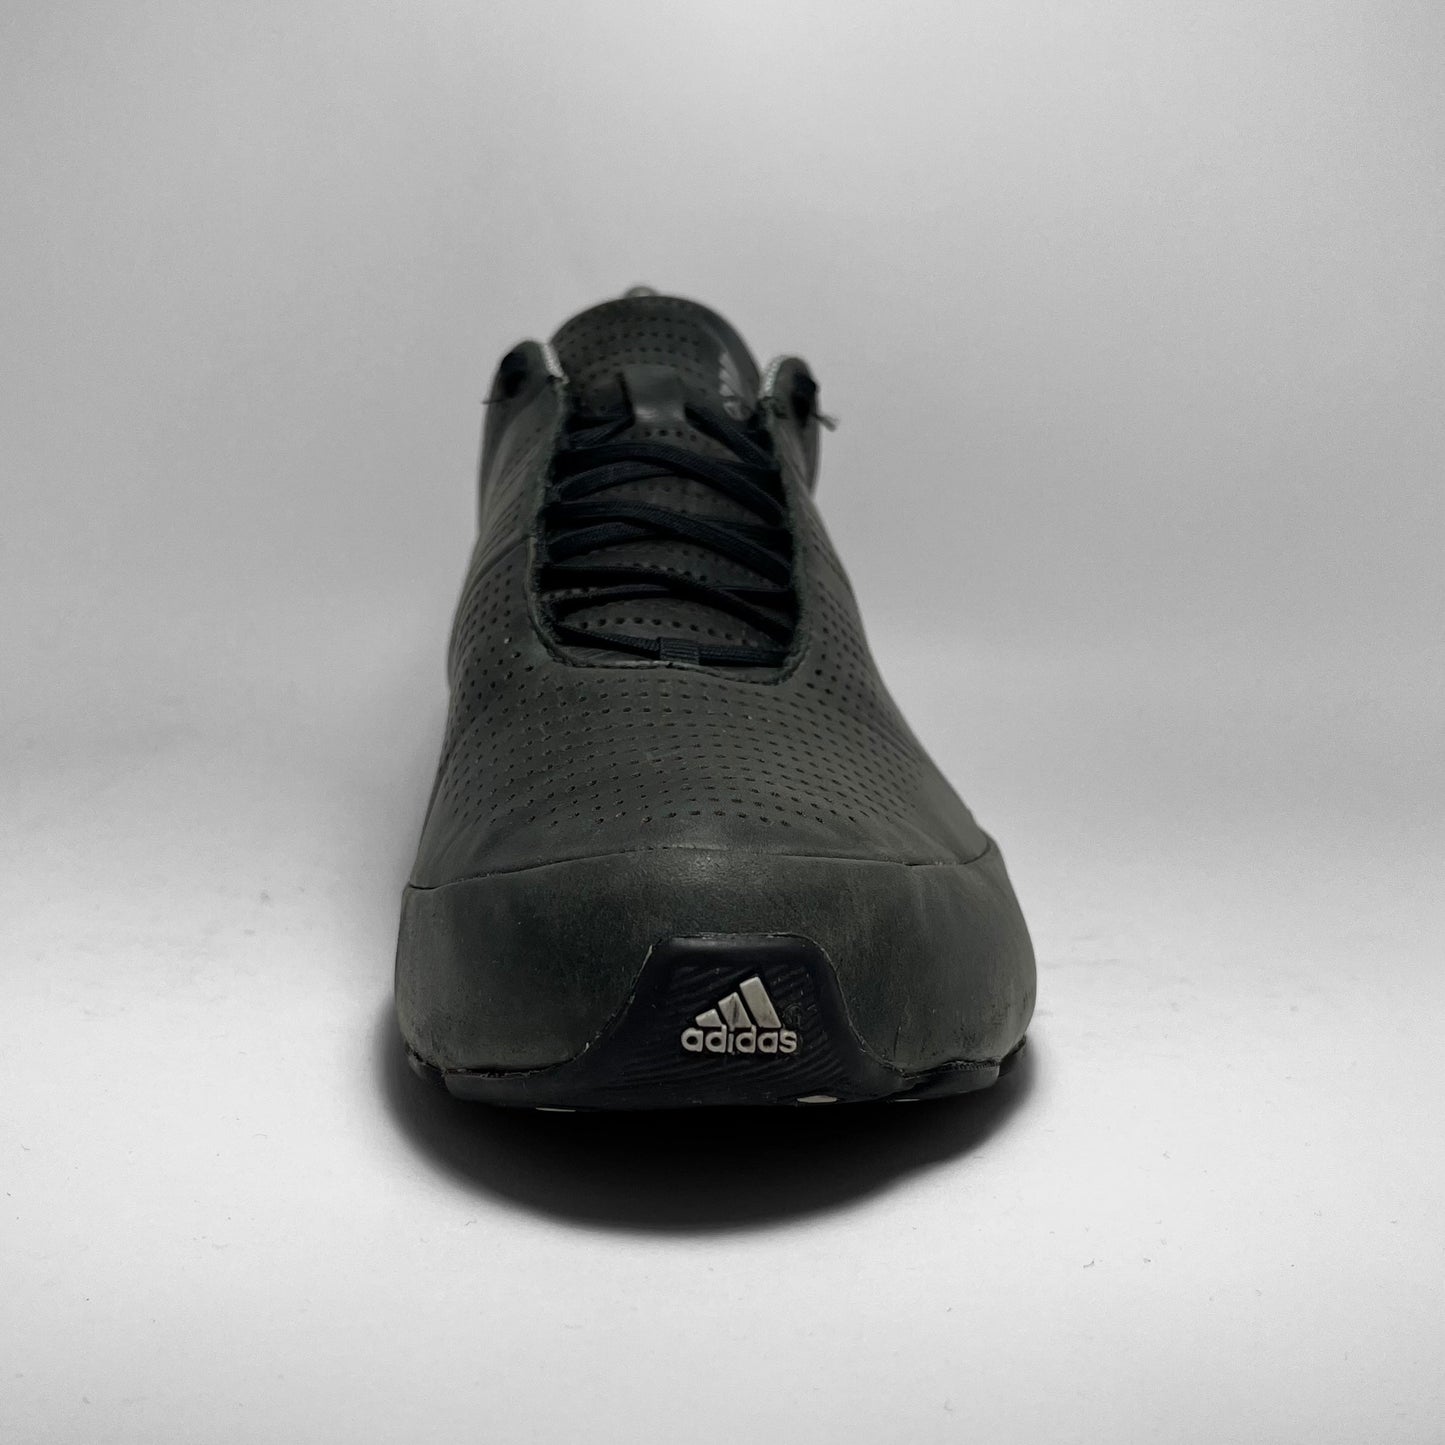 Adidas Bounce Leather ‘Sample’ (2006)